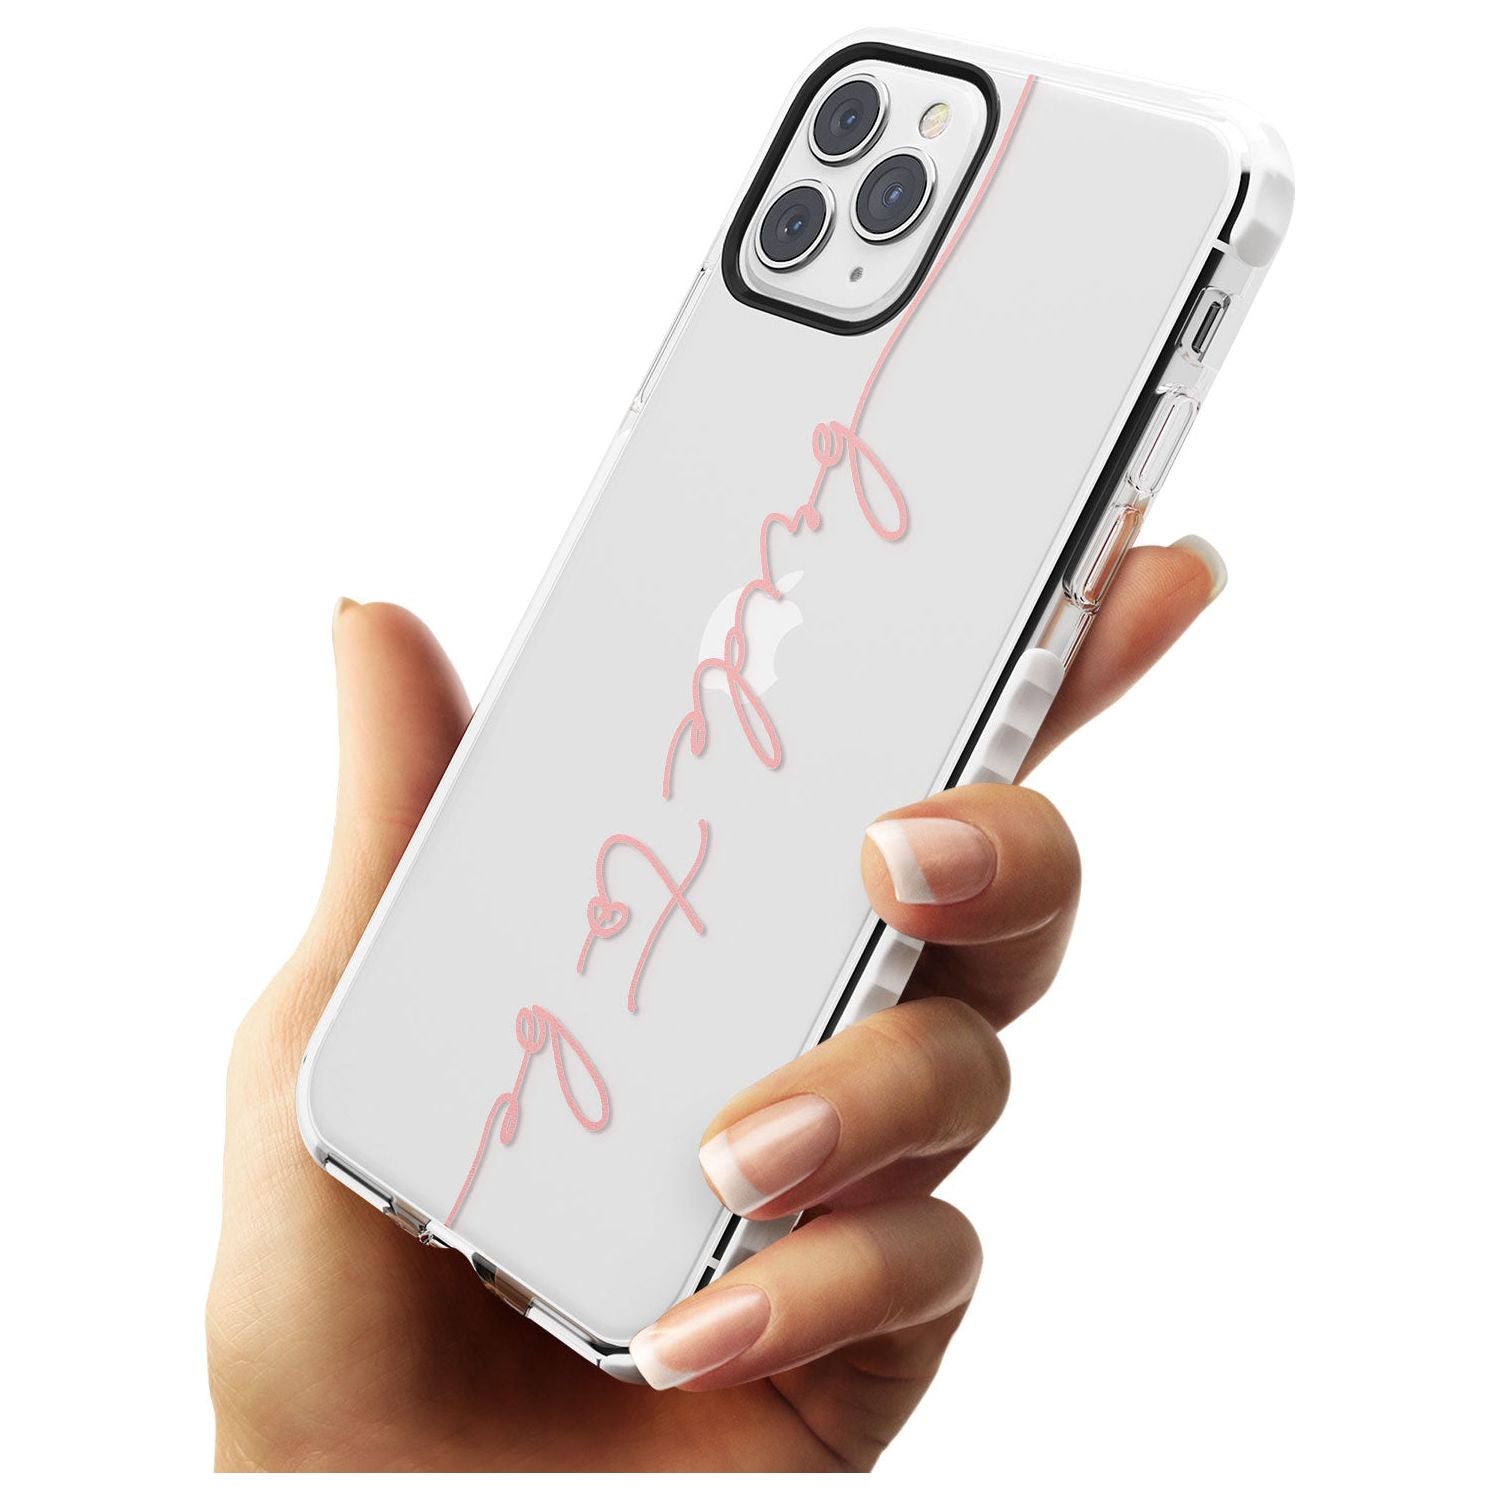 Bride to Be - Transparent Wedding Design Impact Phone Case for iPhone 11 Pro Max